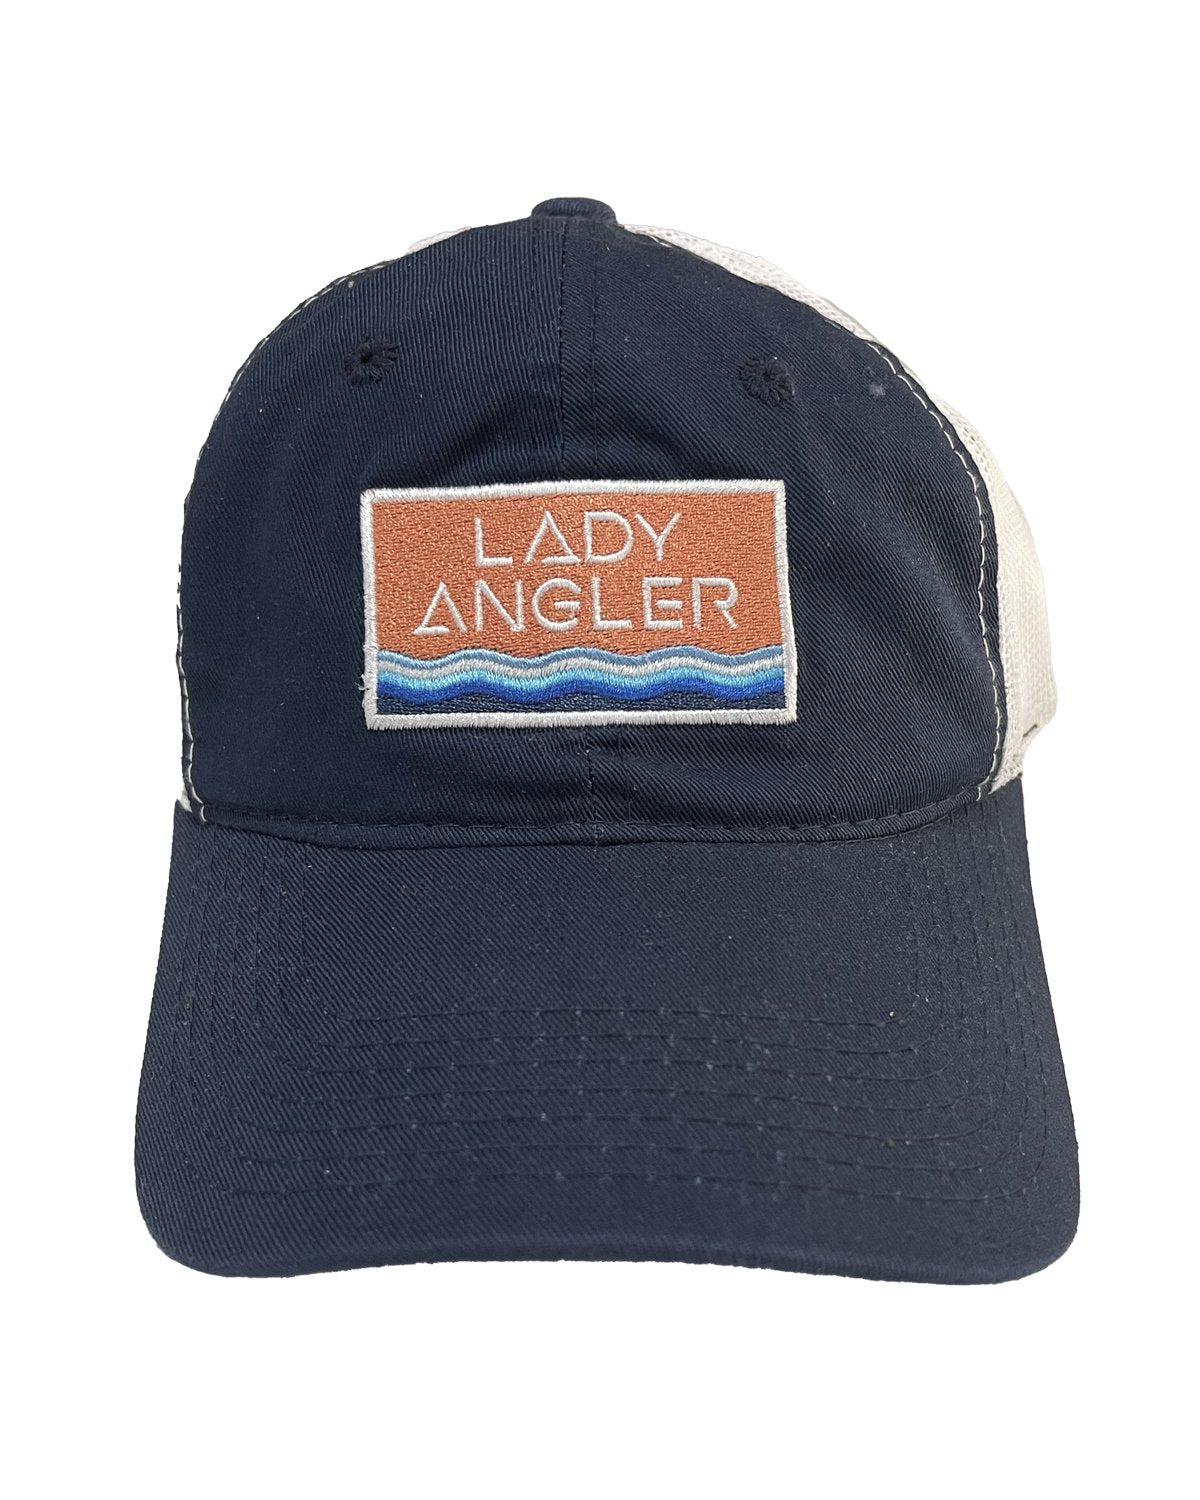 Lady Angler Hat - Black Cat MFG - Hat